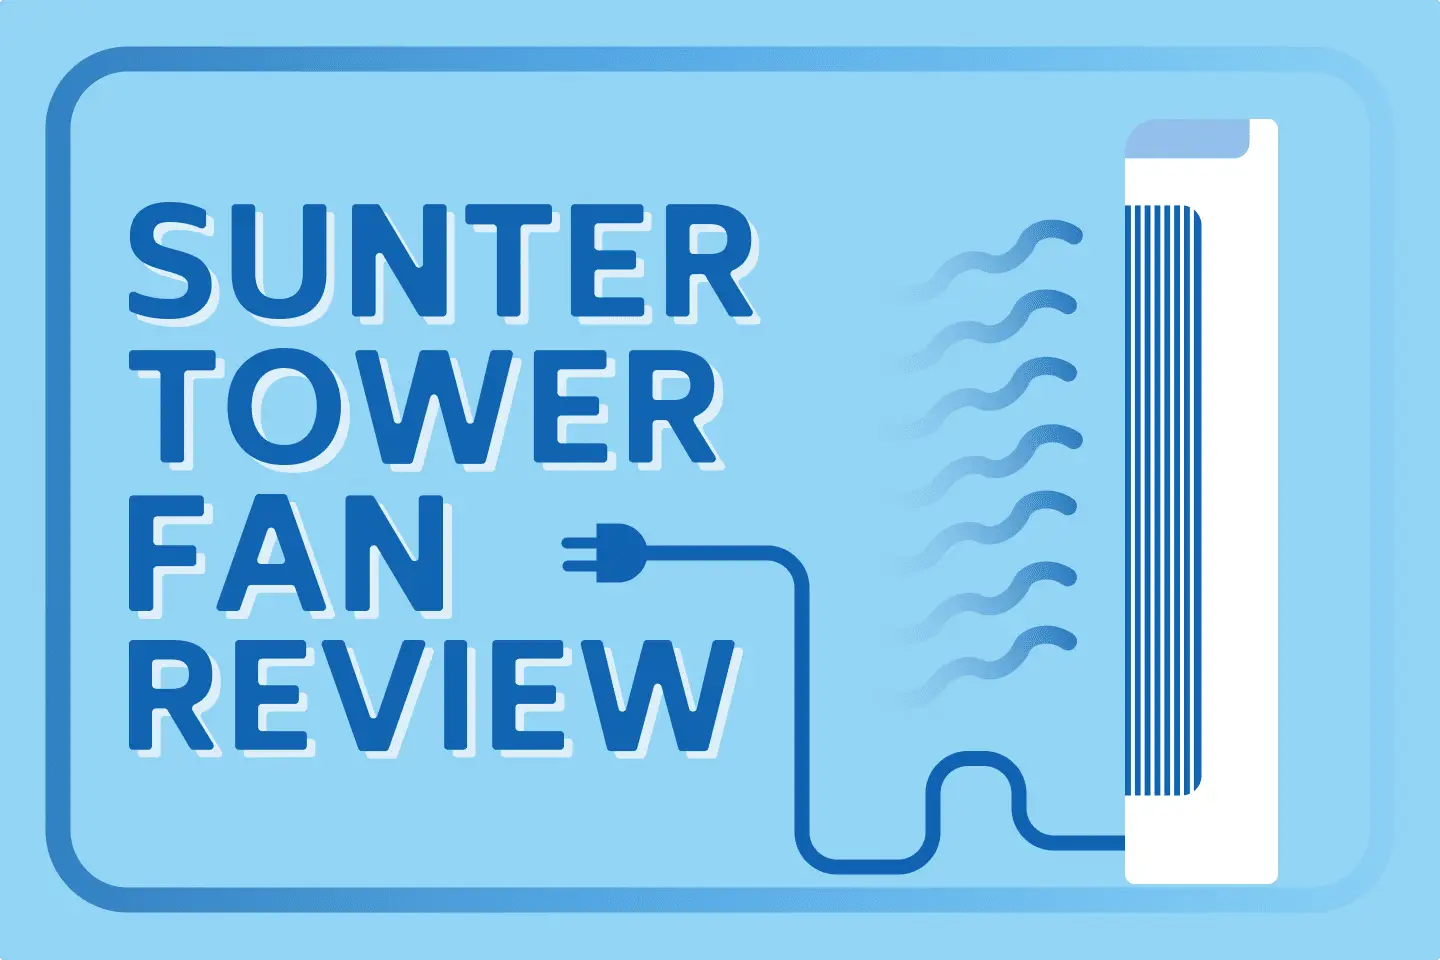 Sunter Tower Fan Review